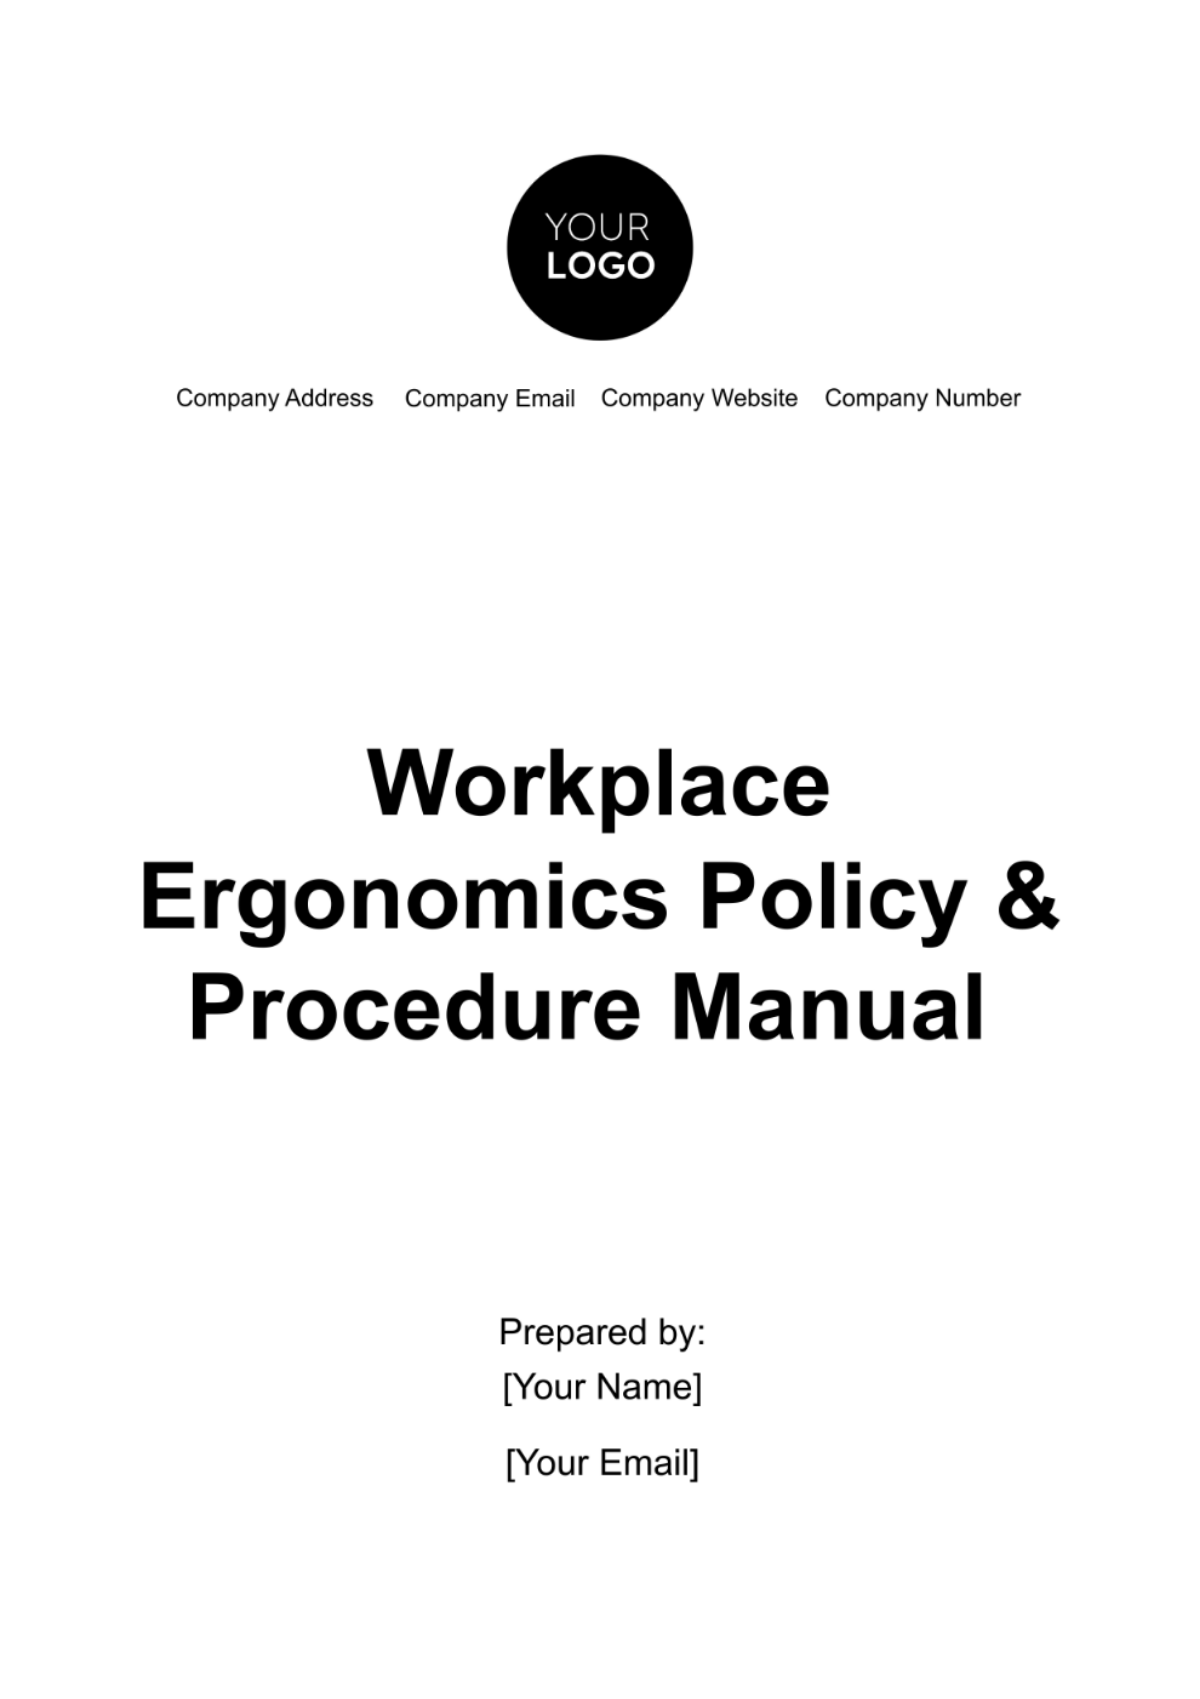 Workplace Ergonomics Policy & Procedure Manual Template